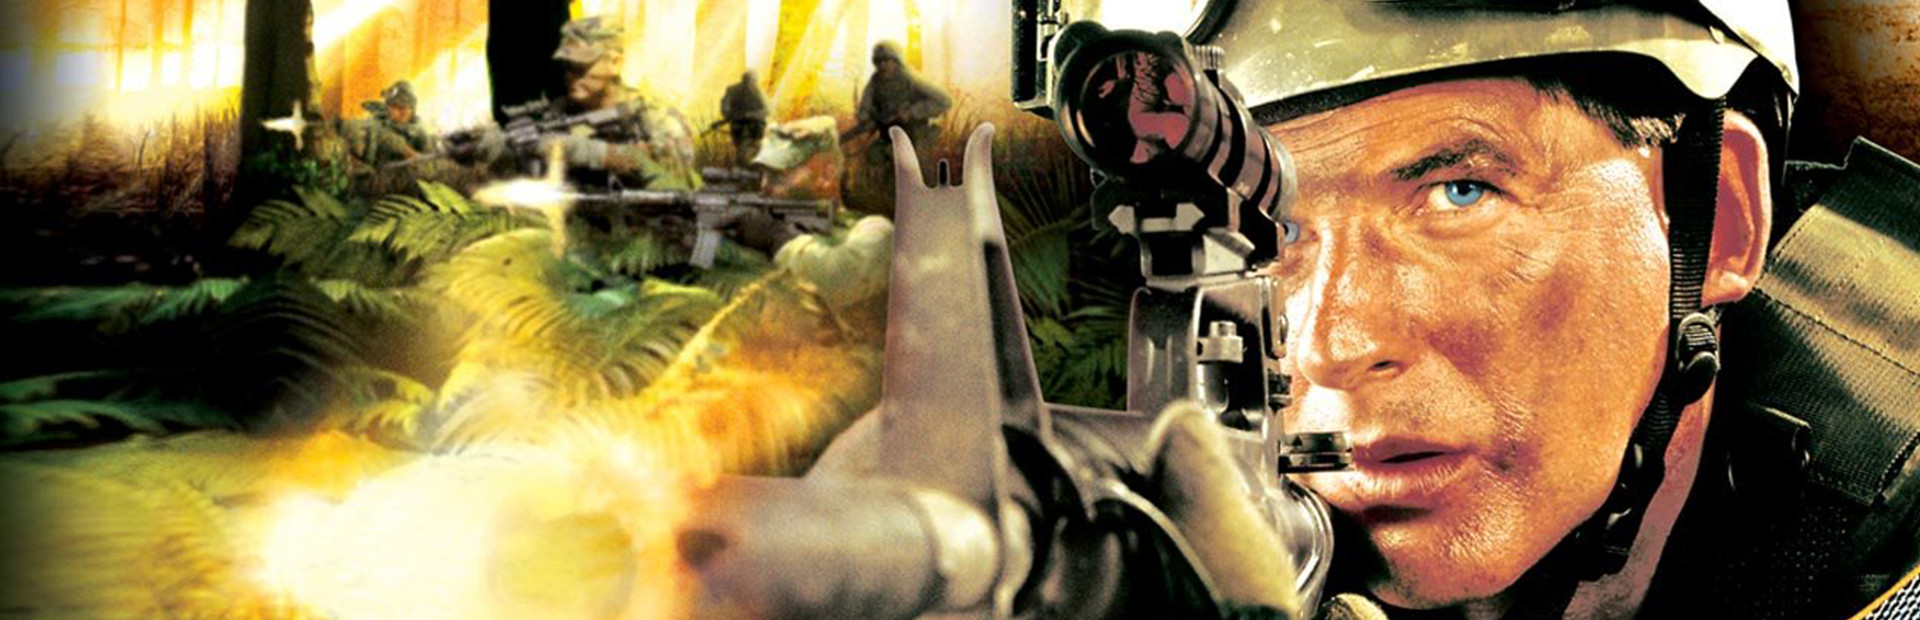 Delta Force — Black Hawk Down: Team Sabre cover image